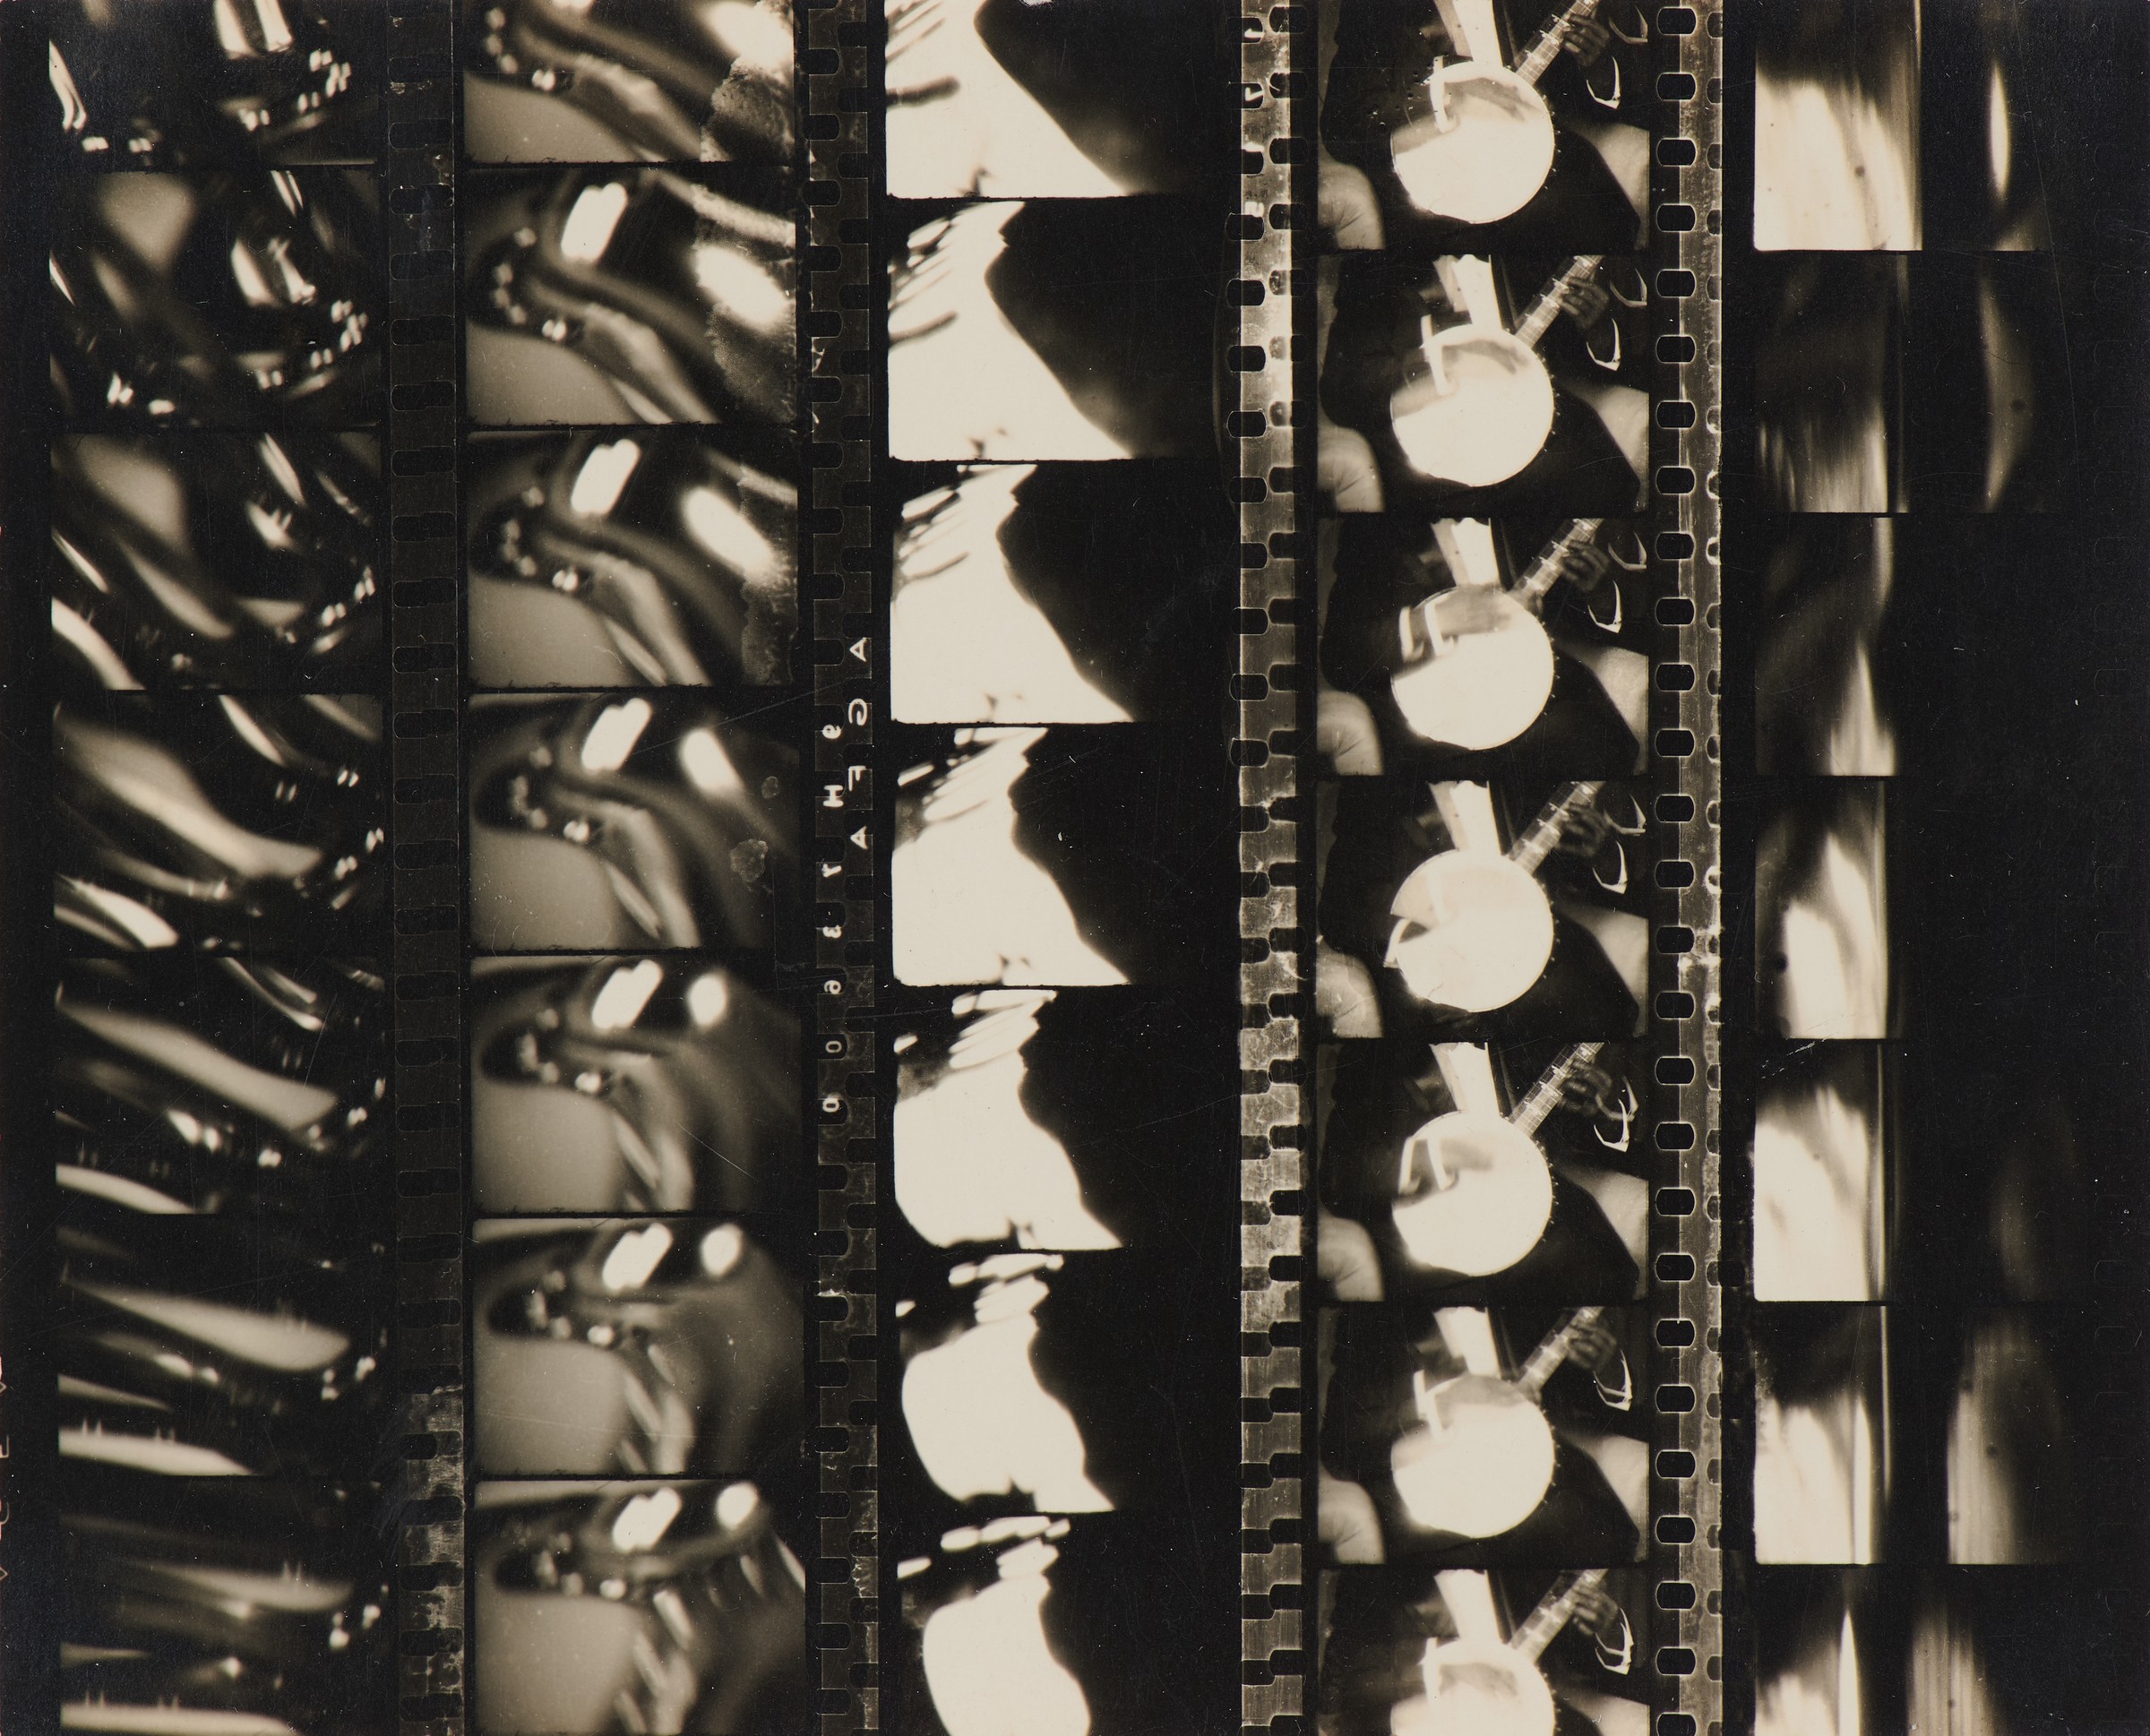 Man Ray - Short Film 